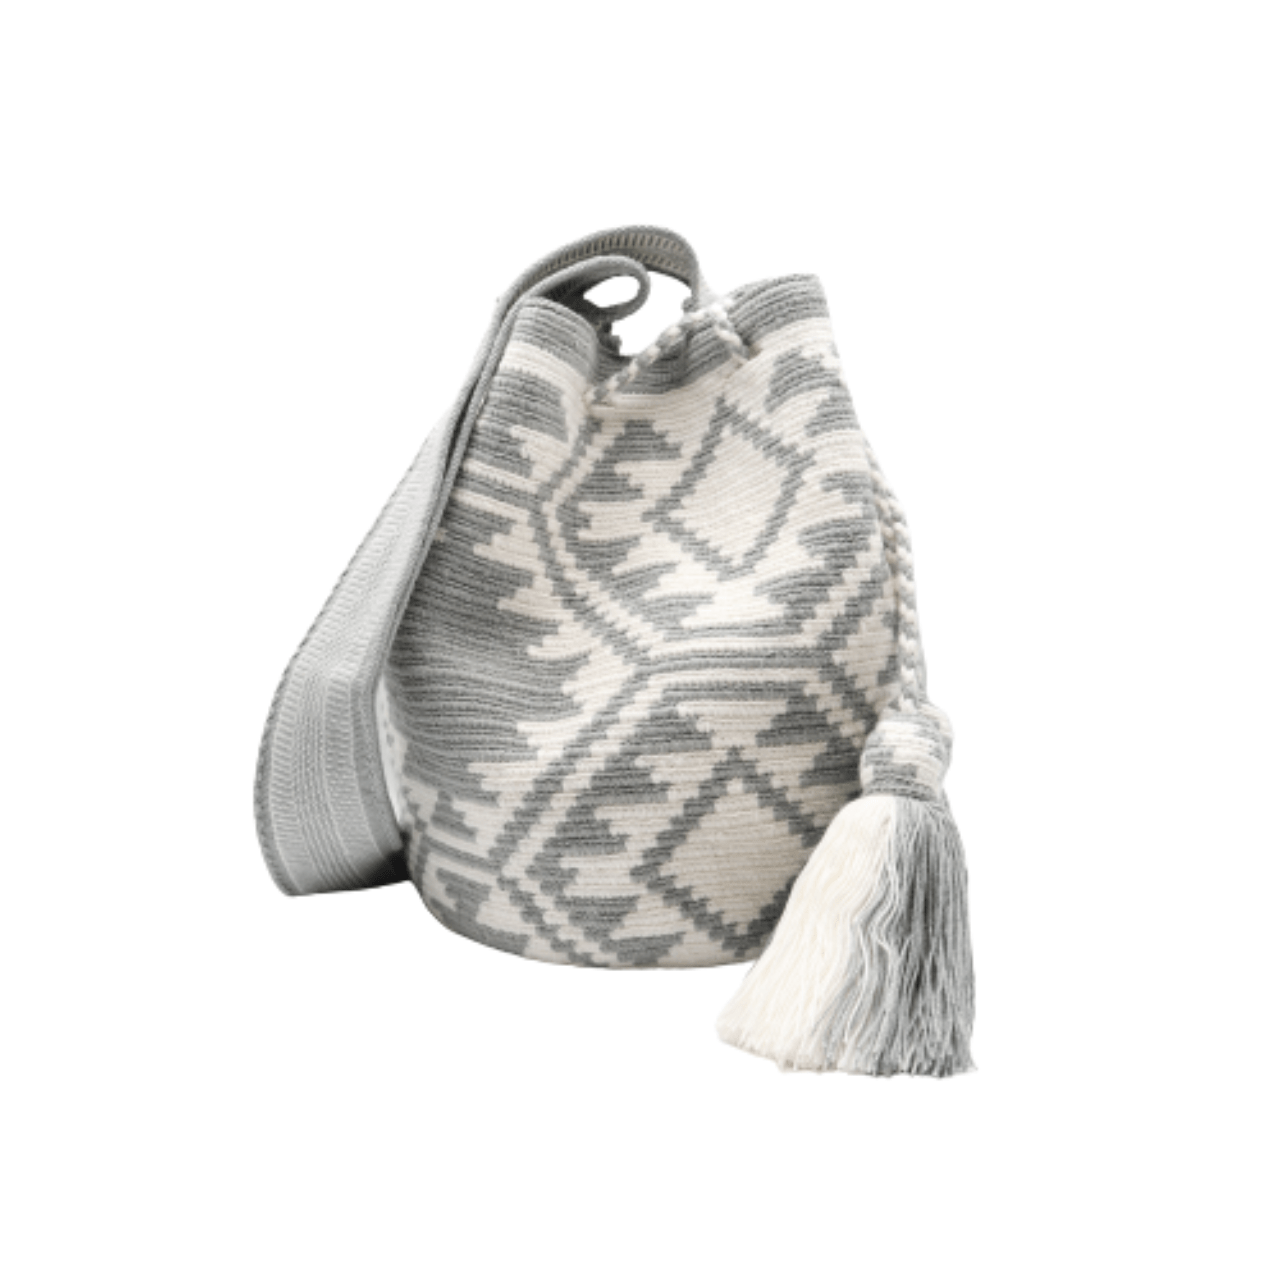 Eva Wayuu Bag - White and Fog Gray Color Blend - Elegant and Timeless Design - Handcrafted Beauty